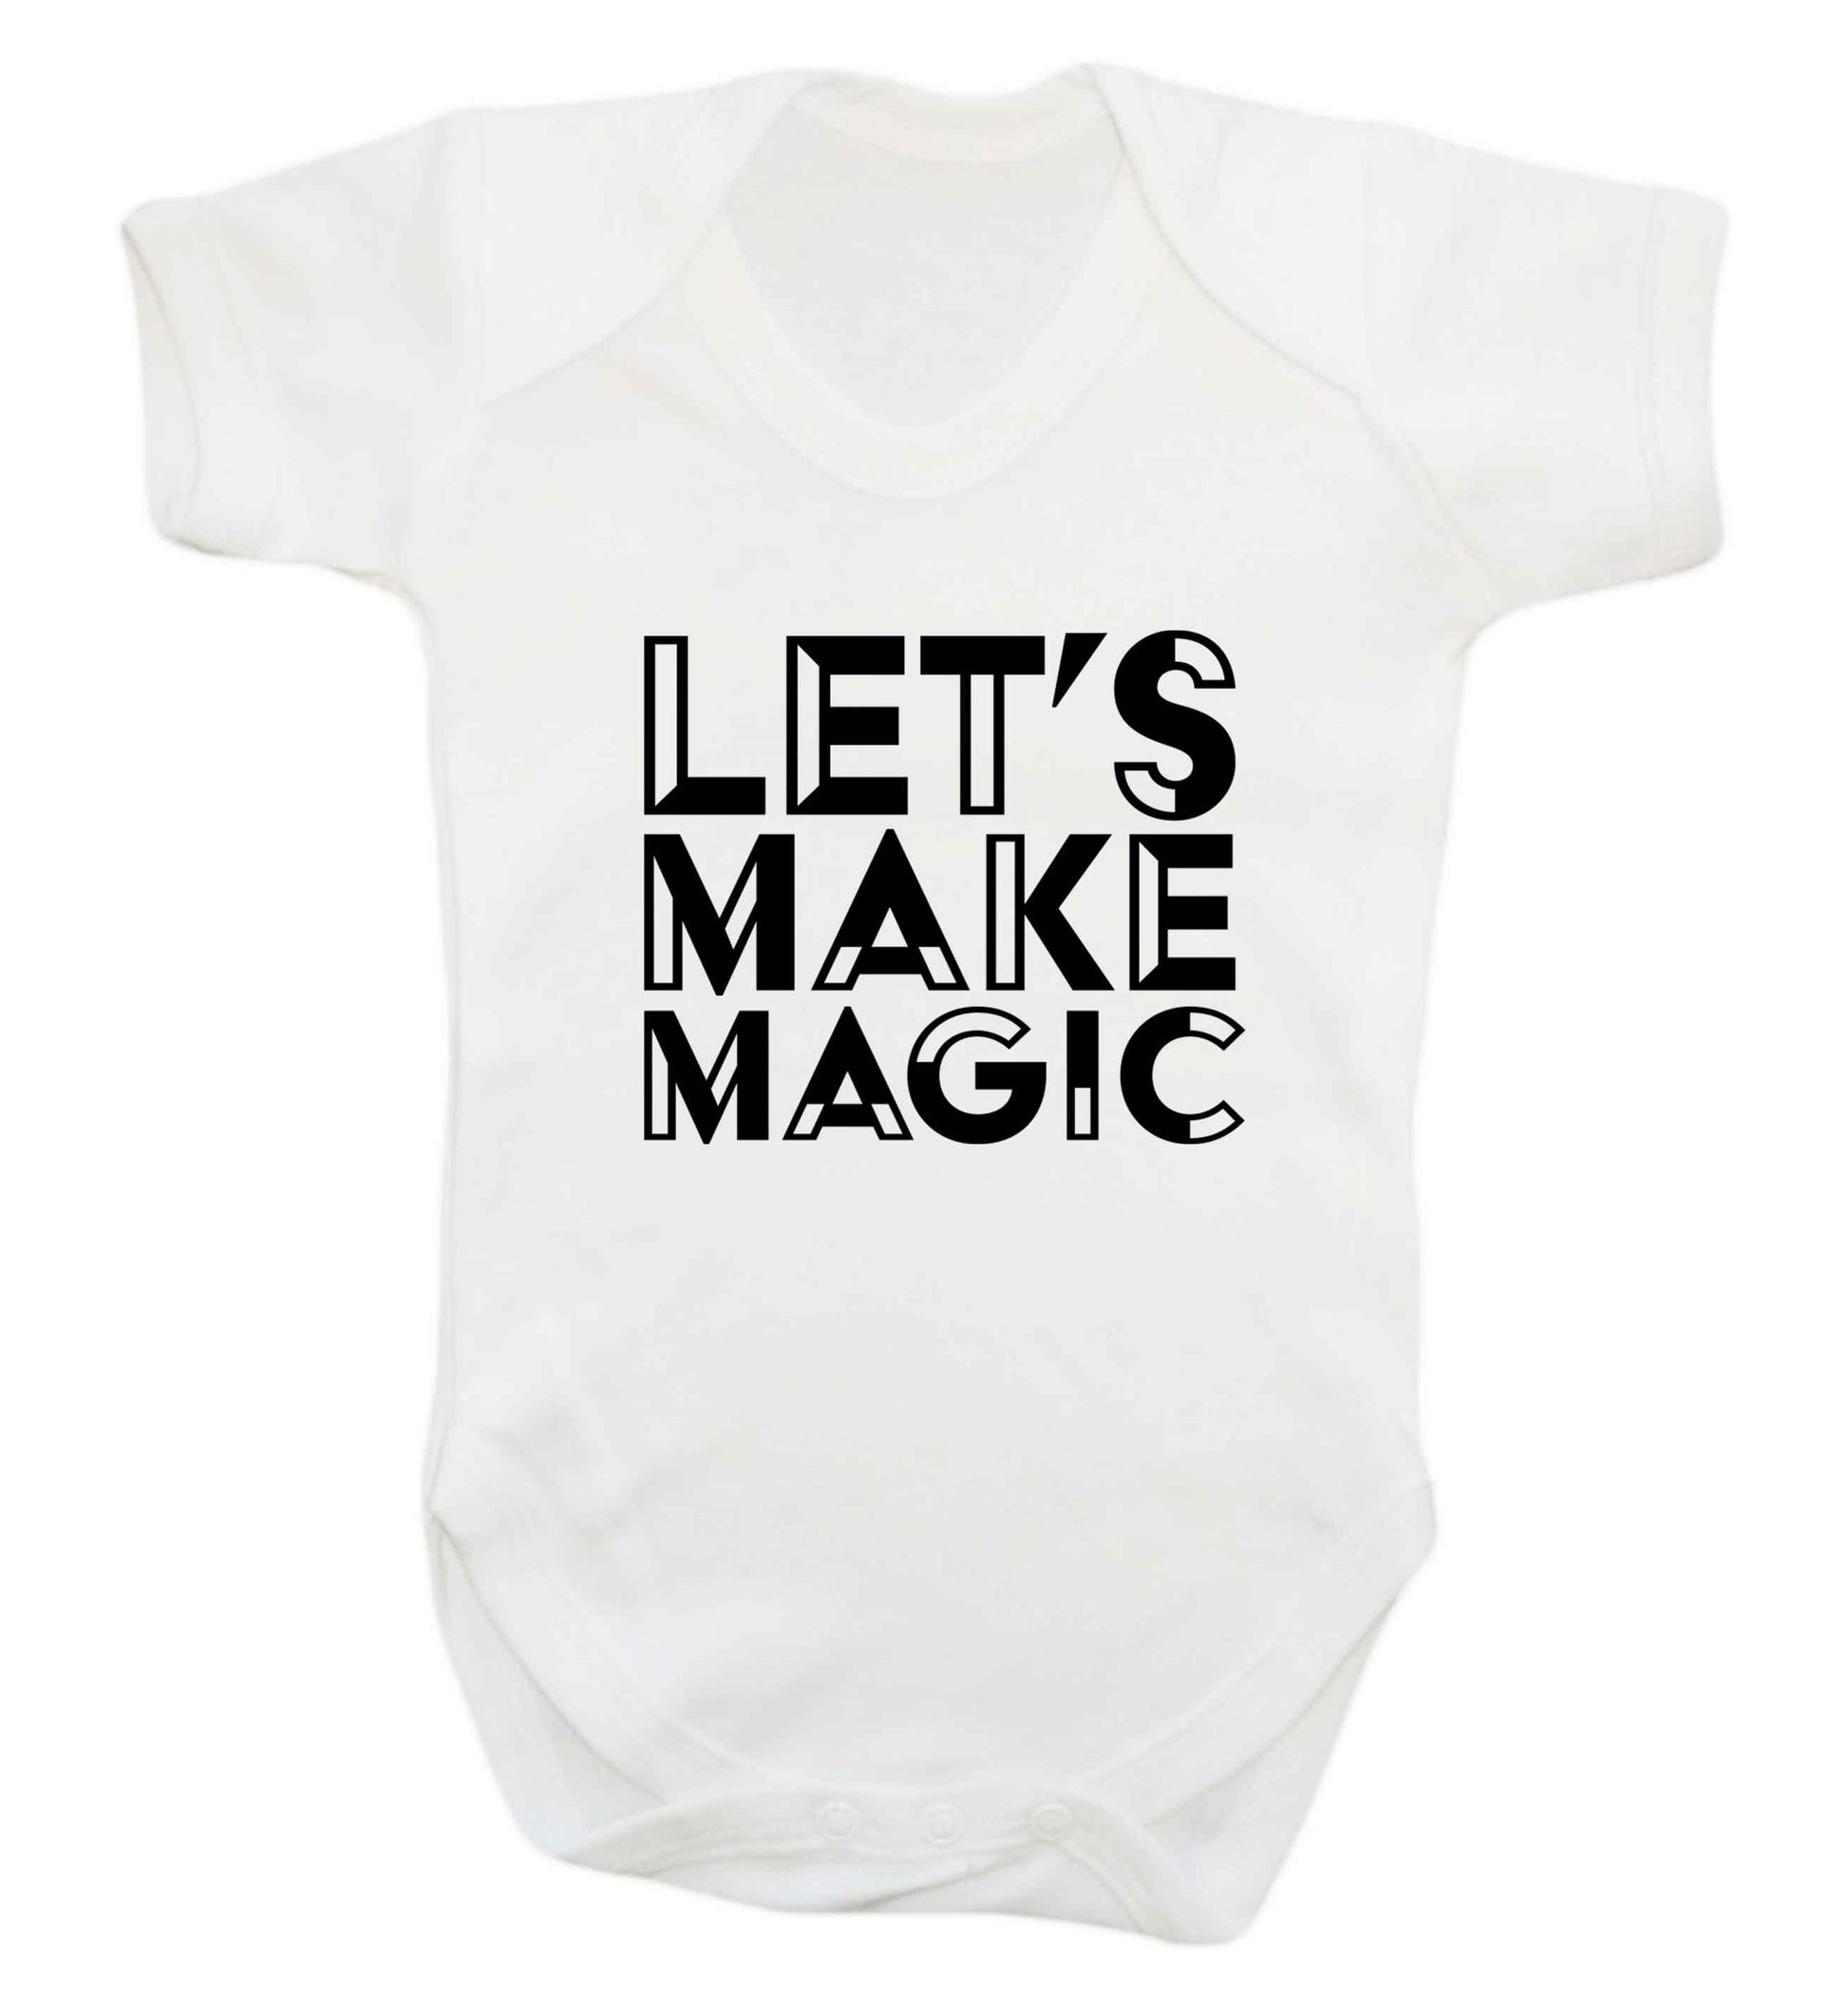 Let's make magic baby vest white 18-24 months